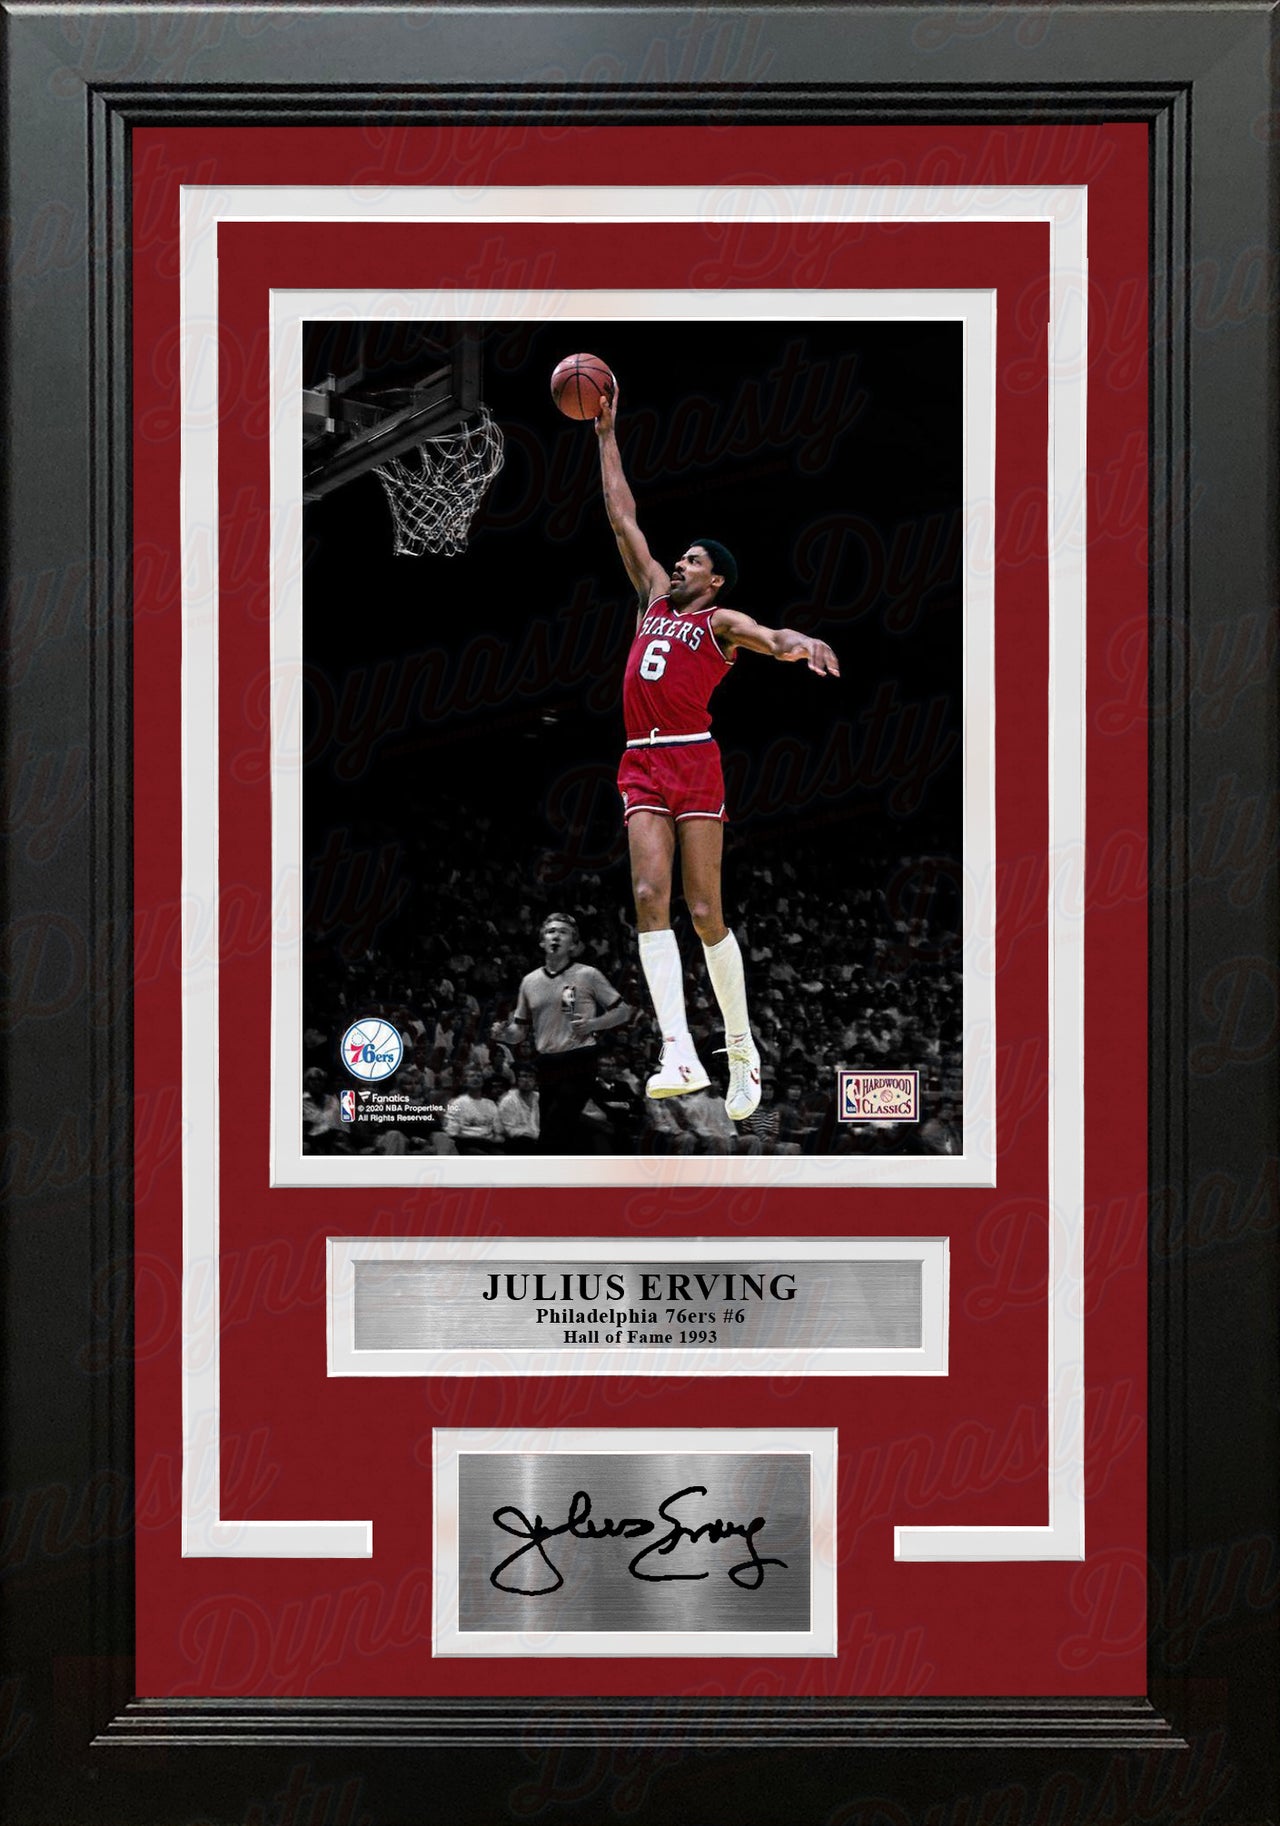 Julius "Dr. J" Erving Blackout Dunk Philadelphia 76ers 8" x 10" Framed Photo with Engraved Autograph - Dynasty Sports & Framing 